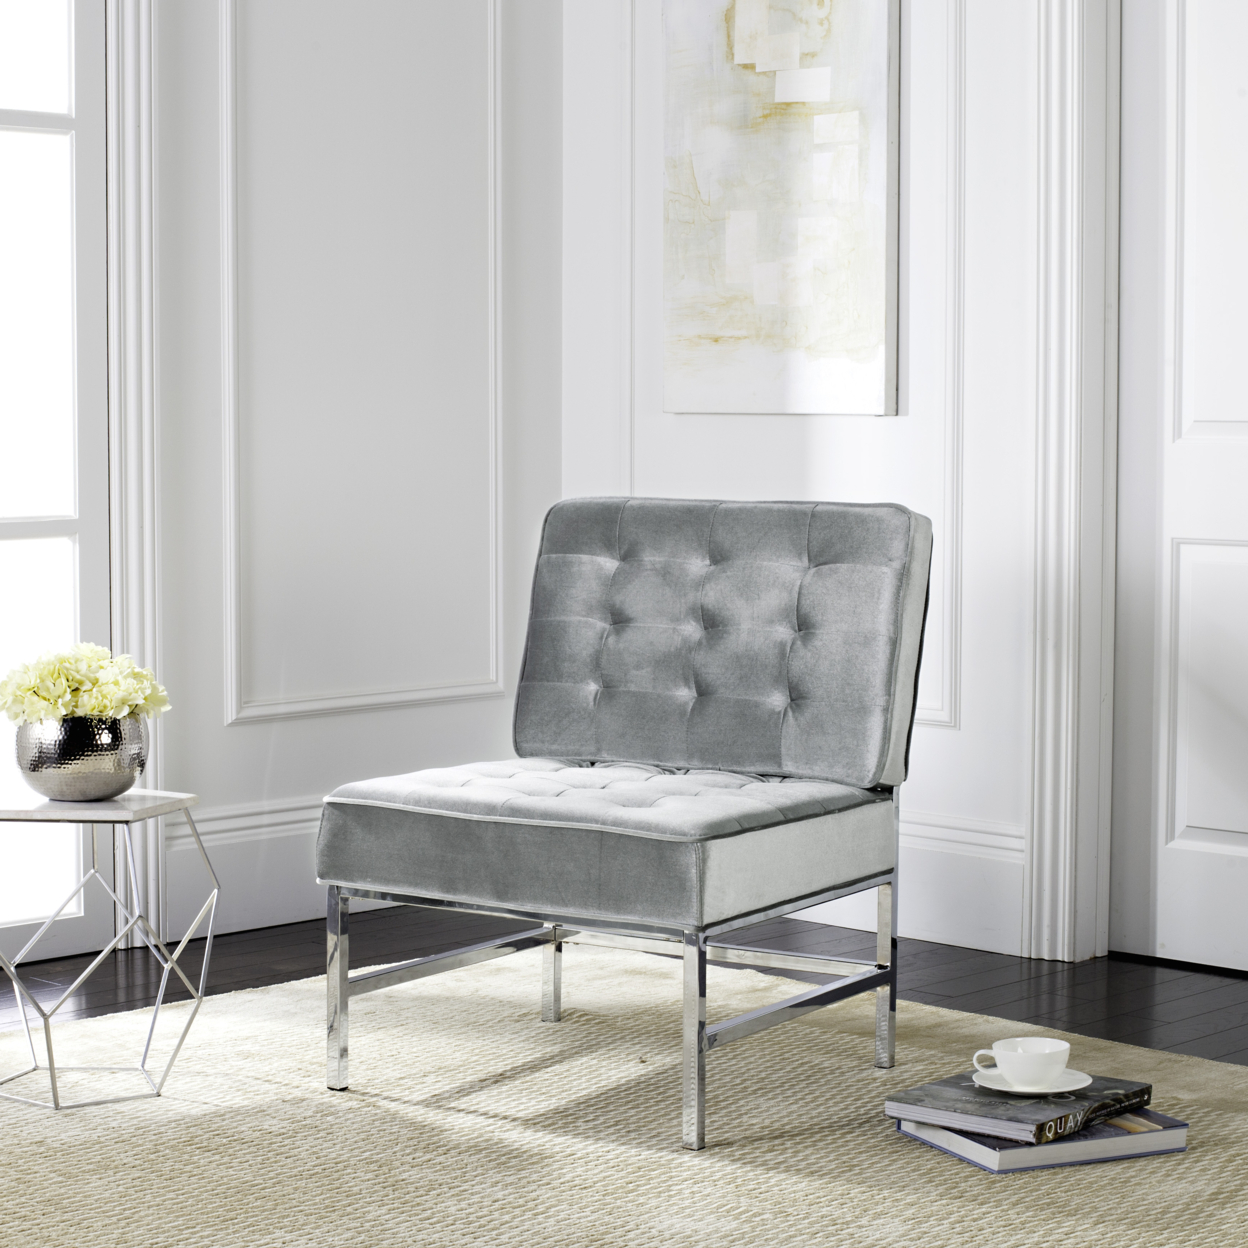 SAFAVIEH Ansel Modern Tufted Linen Chrome Accent Chair Light Grey